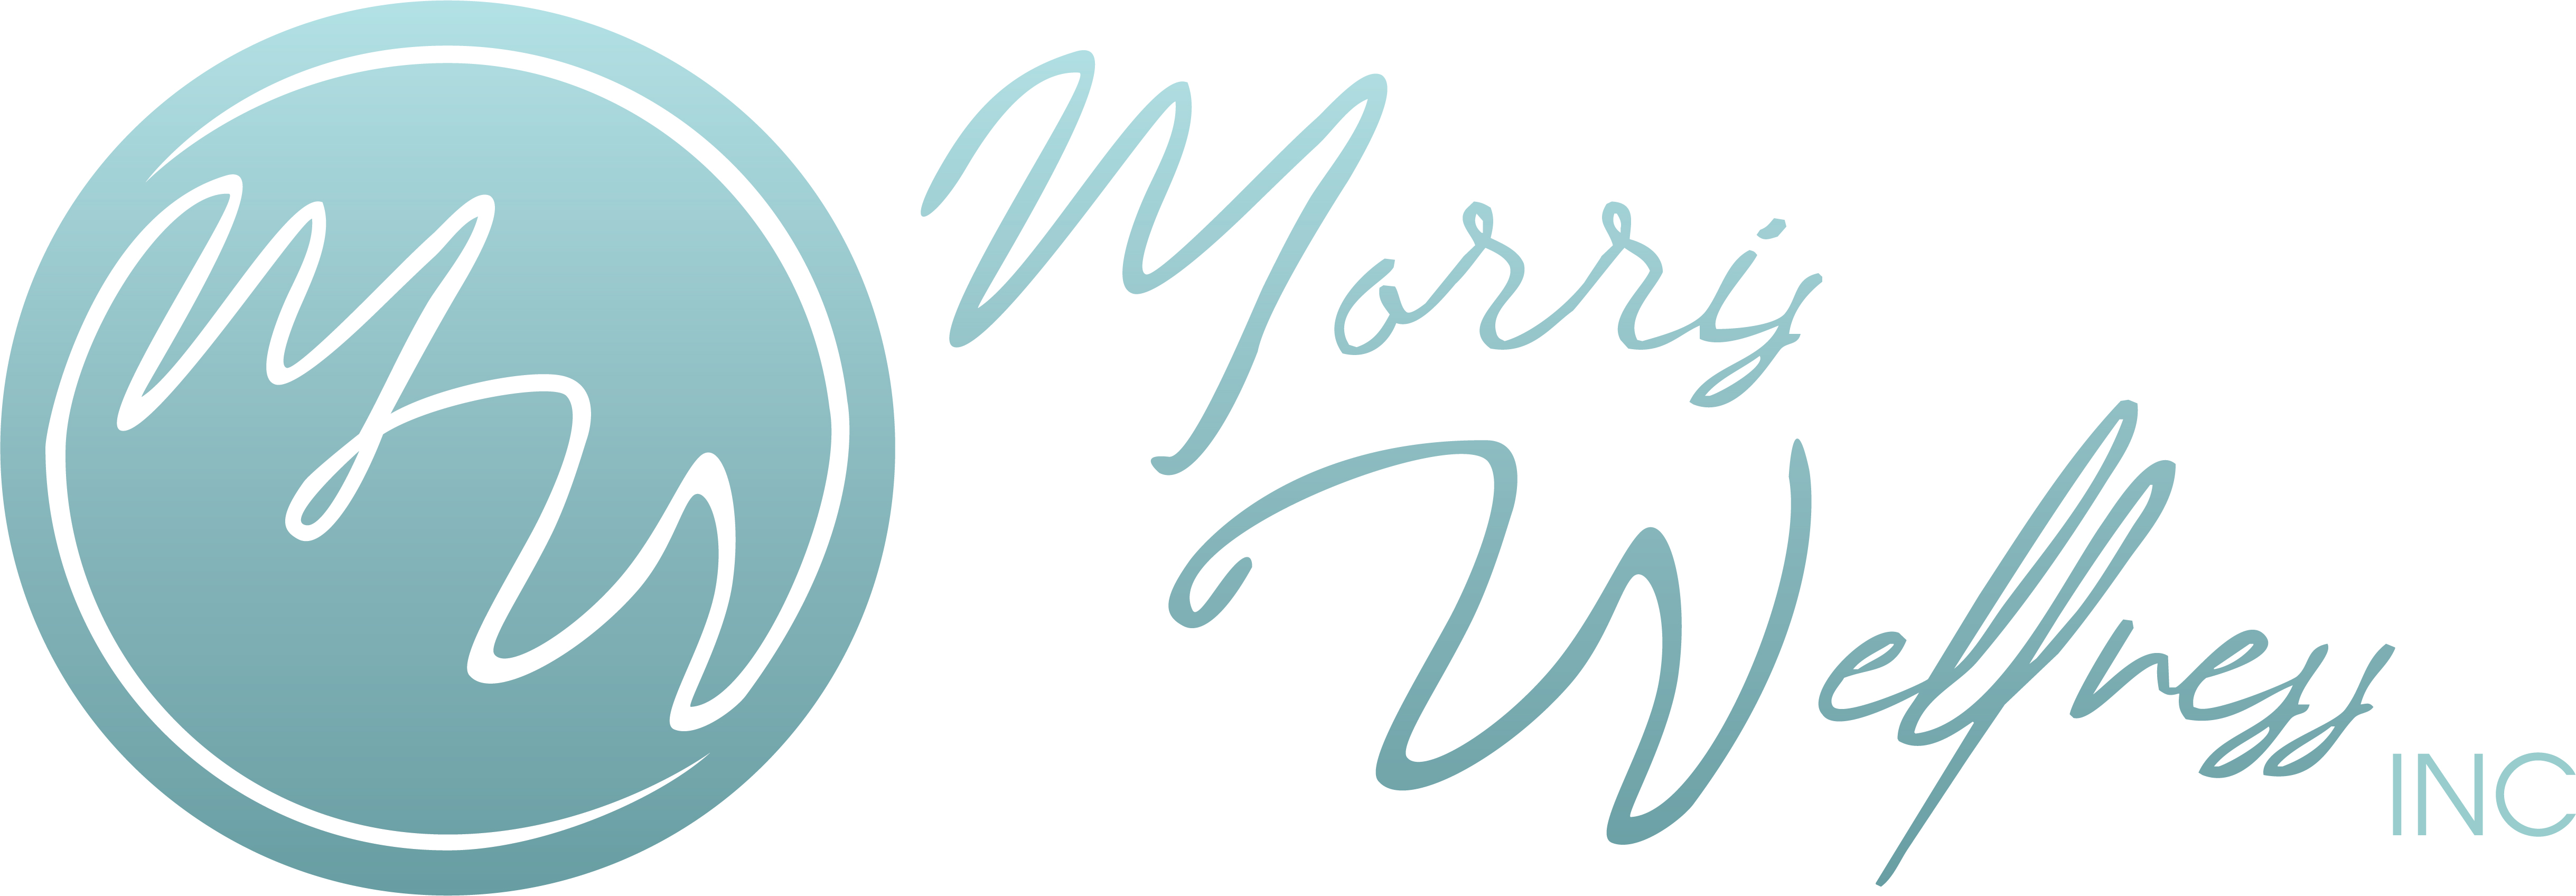  Morris Wellness, LLC letterhead-style logo